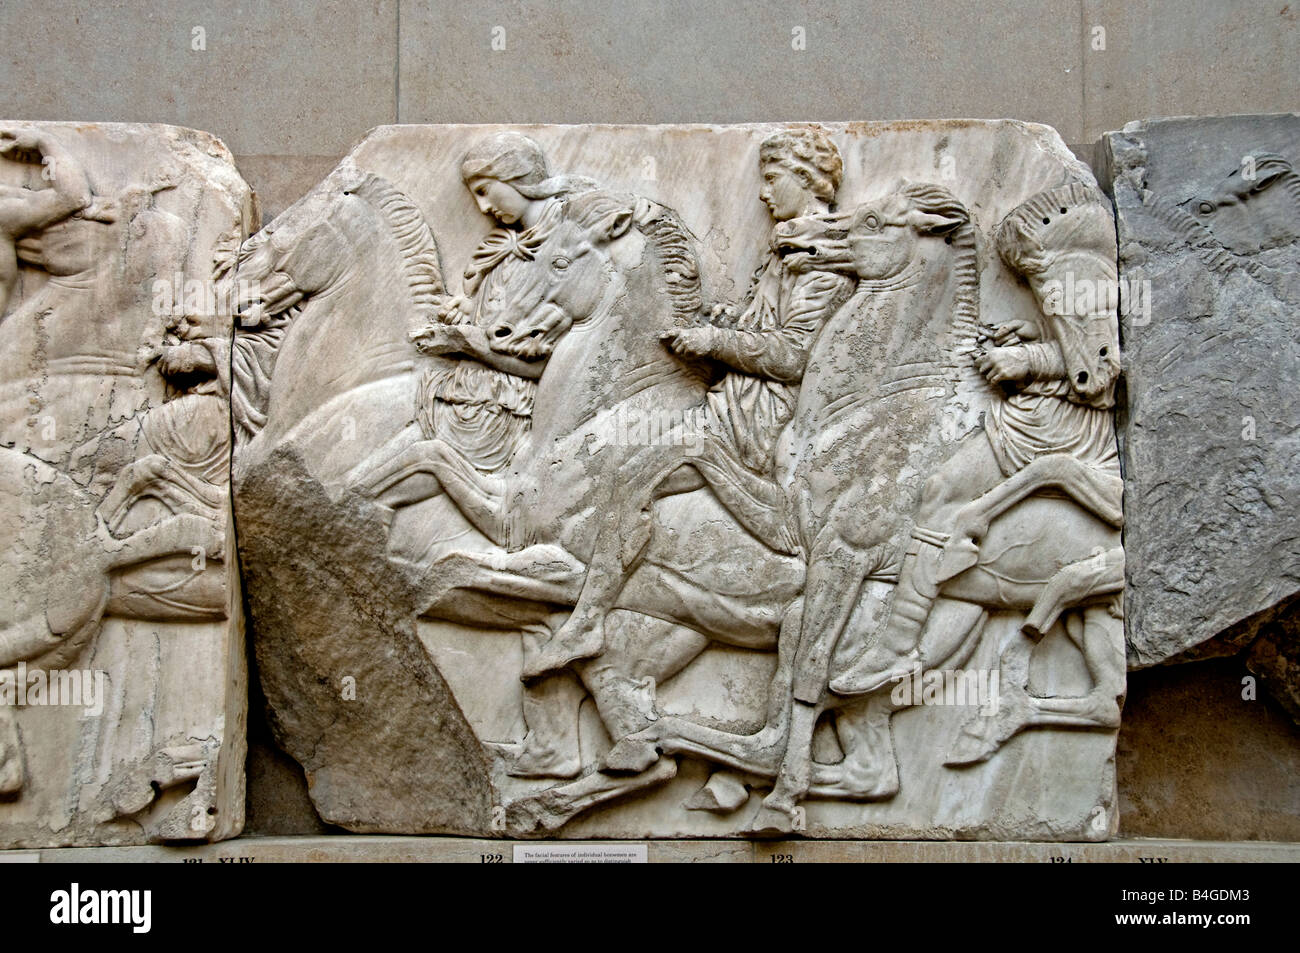 Elgin Marbles, Parthenon Marbles, sculptures of the Parthenon, ,sculptor Phidias, Acropolis of Athens, 5th century BCE, Athena Greece, British Museum, Stock Photo